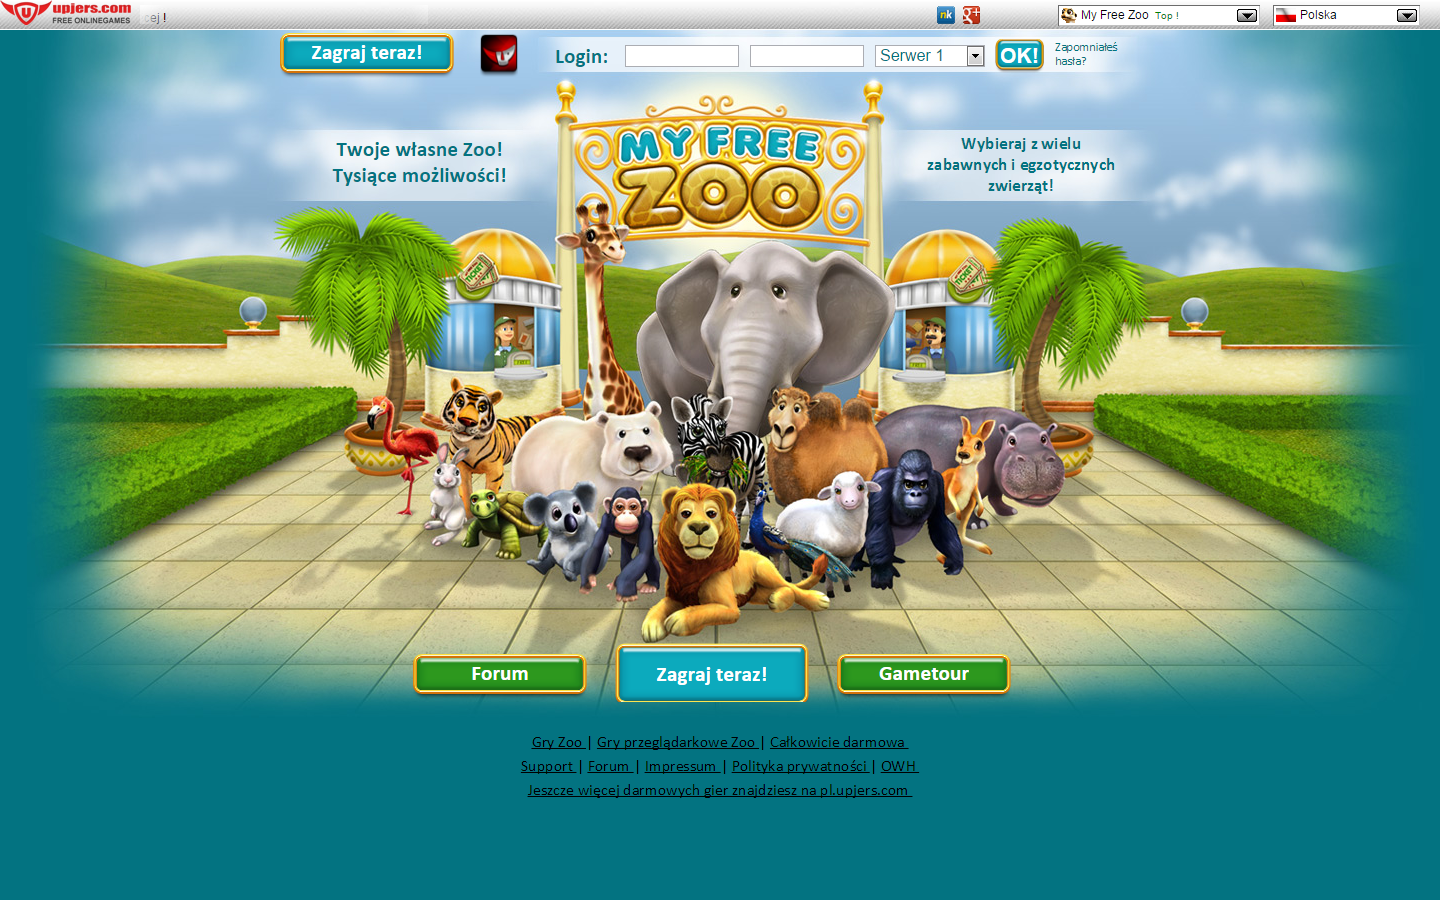 My Free Zoo gra farma